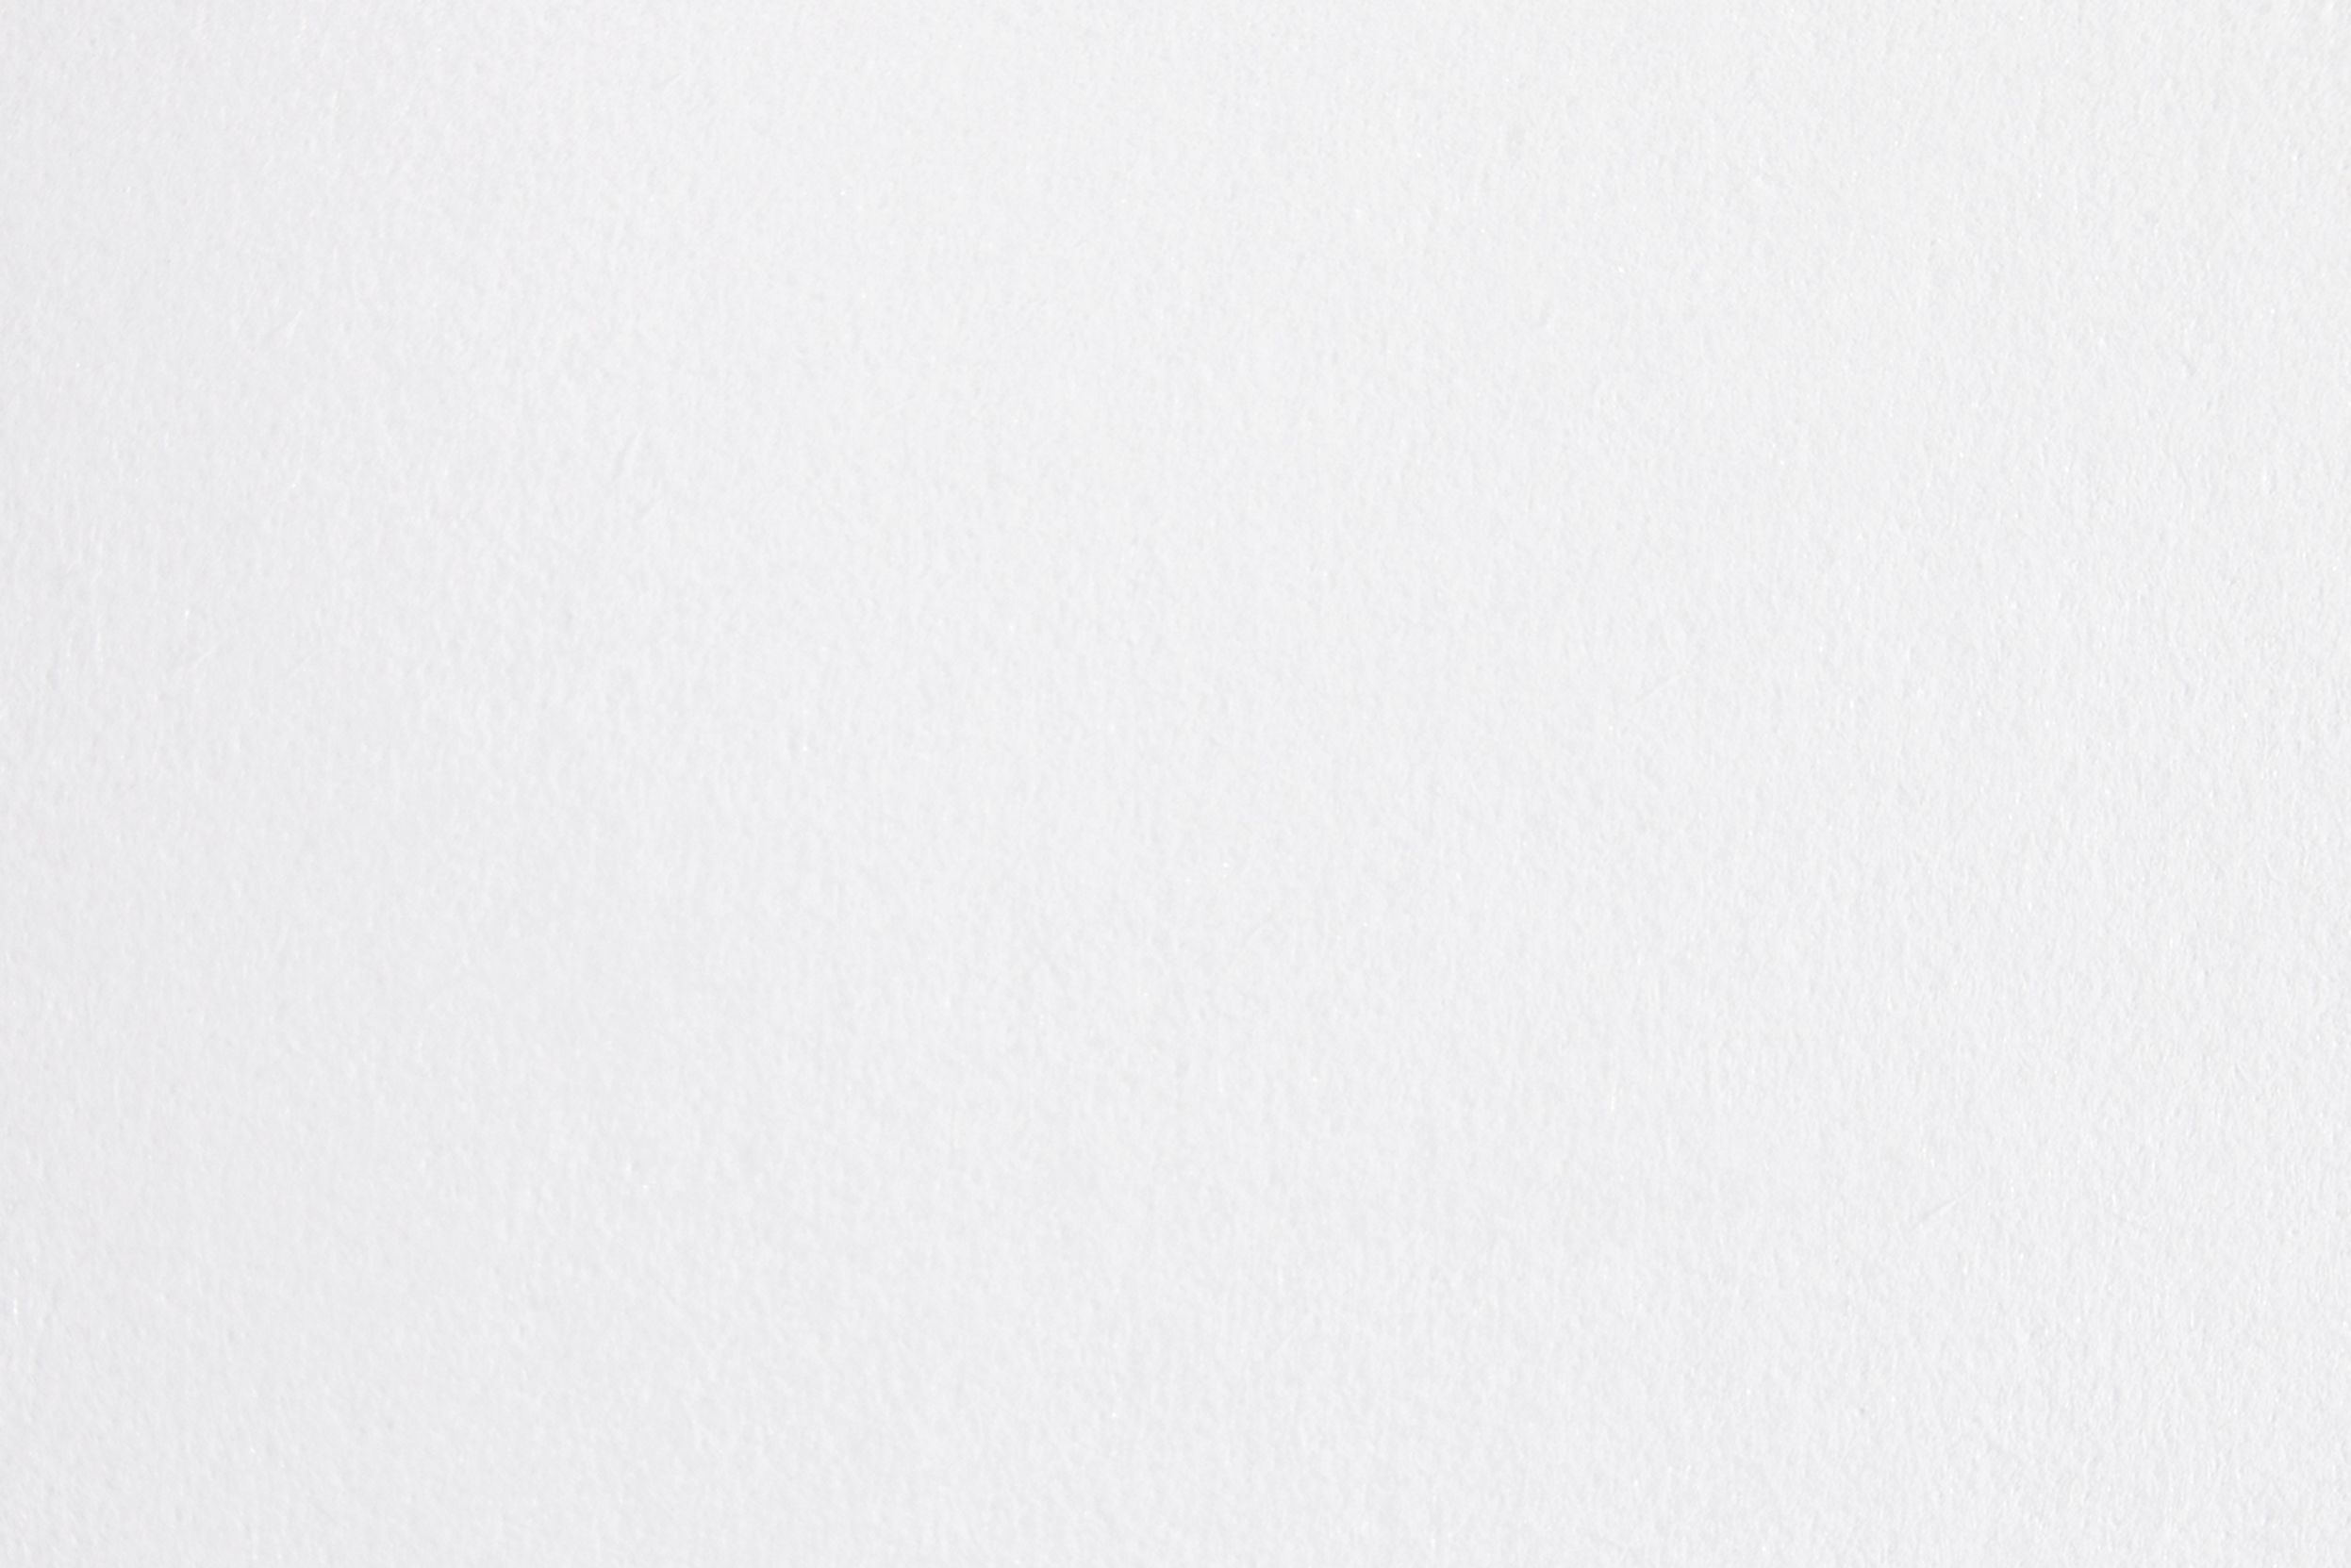 Splendorgel Extra White, strip: Carta naturale di pura cellulosa certificata FSC. Superficie liscia e vellutata. Produttore: Fedrigoni